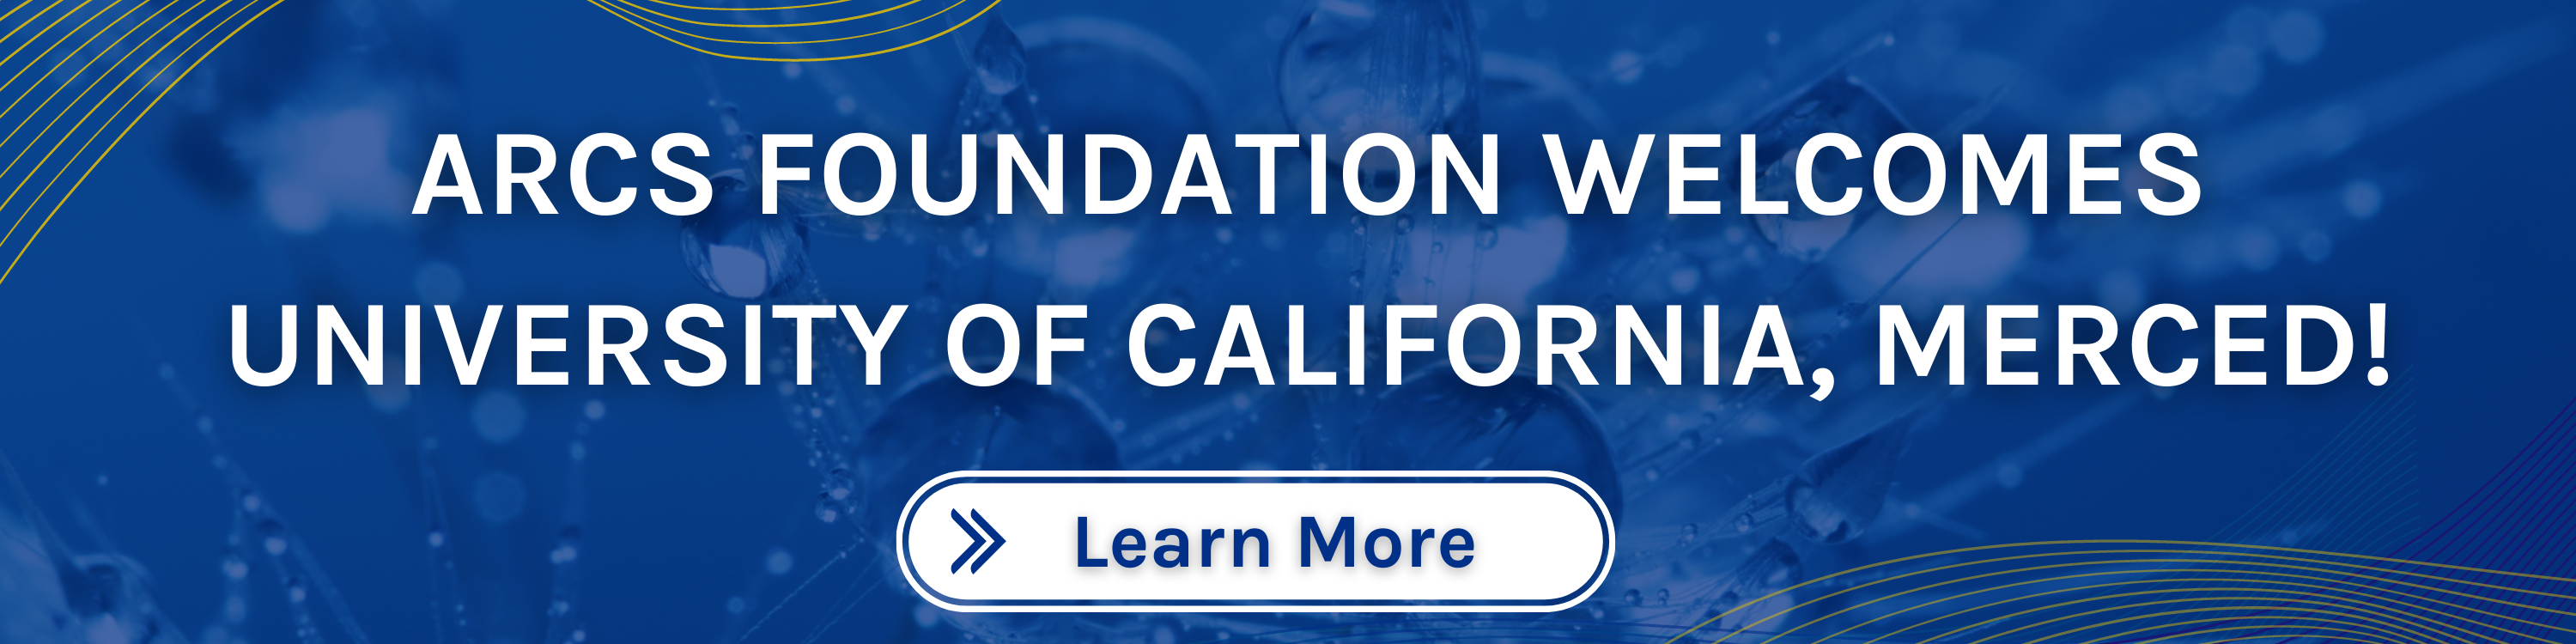 ARCS Foundation Welcomes University of California, Merced